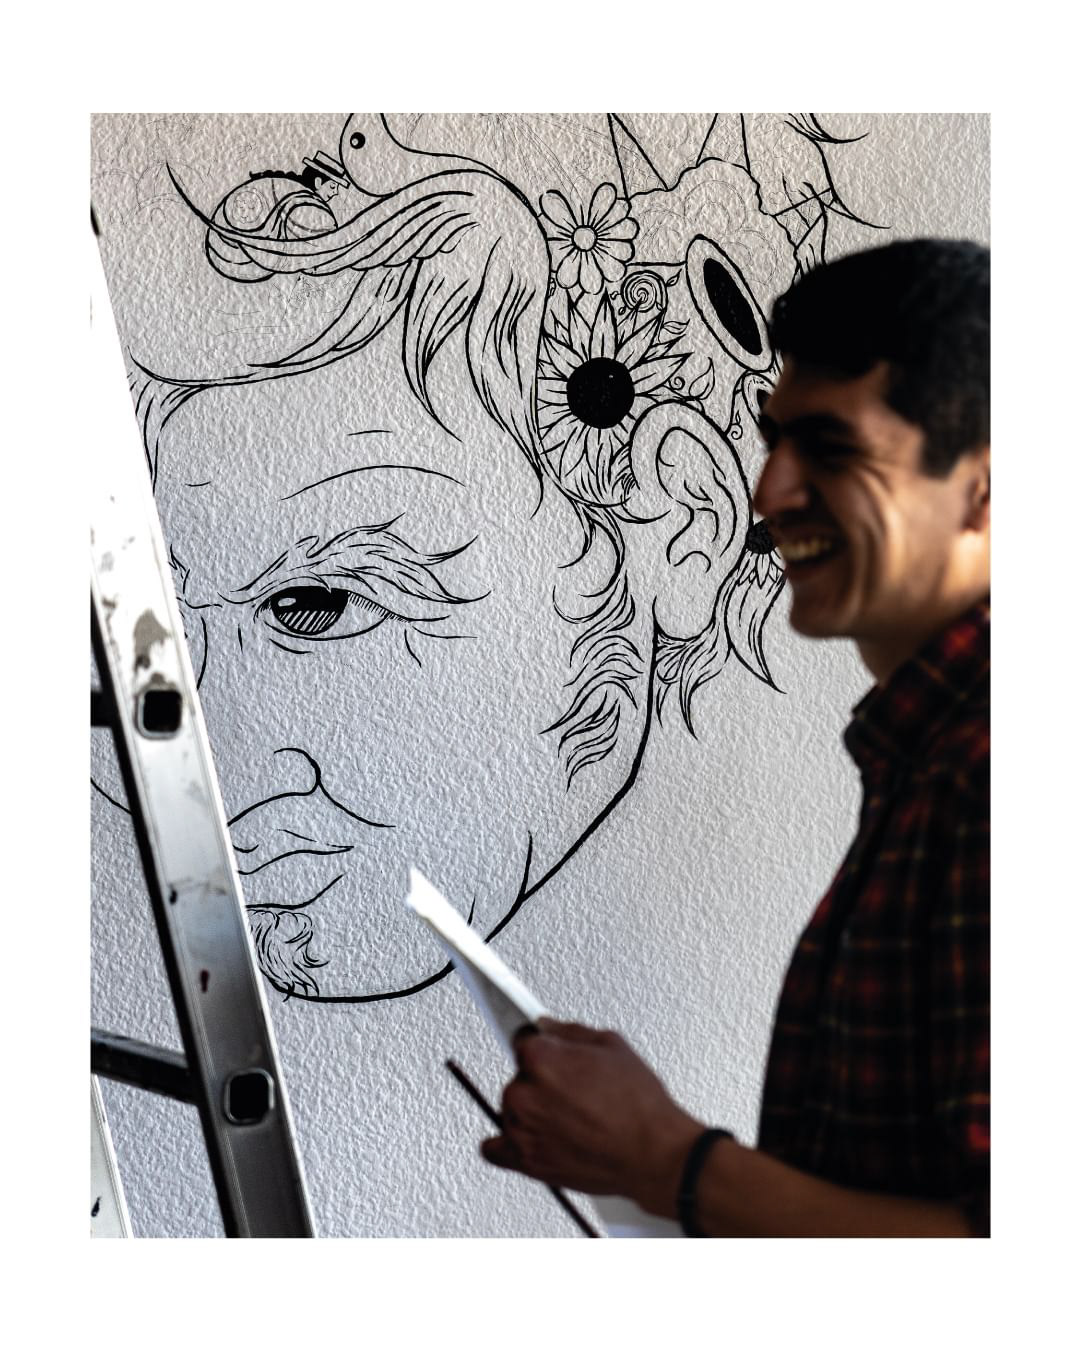 ILLUSTRATION  mural art painting   Drawing  black and white people portrait Urban Ecuador Cuenca Ecuador